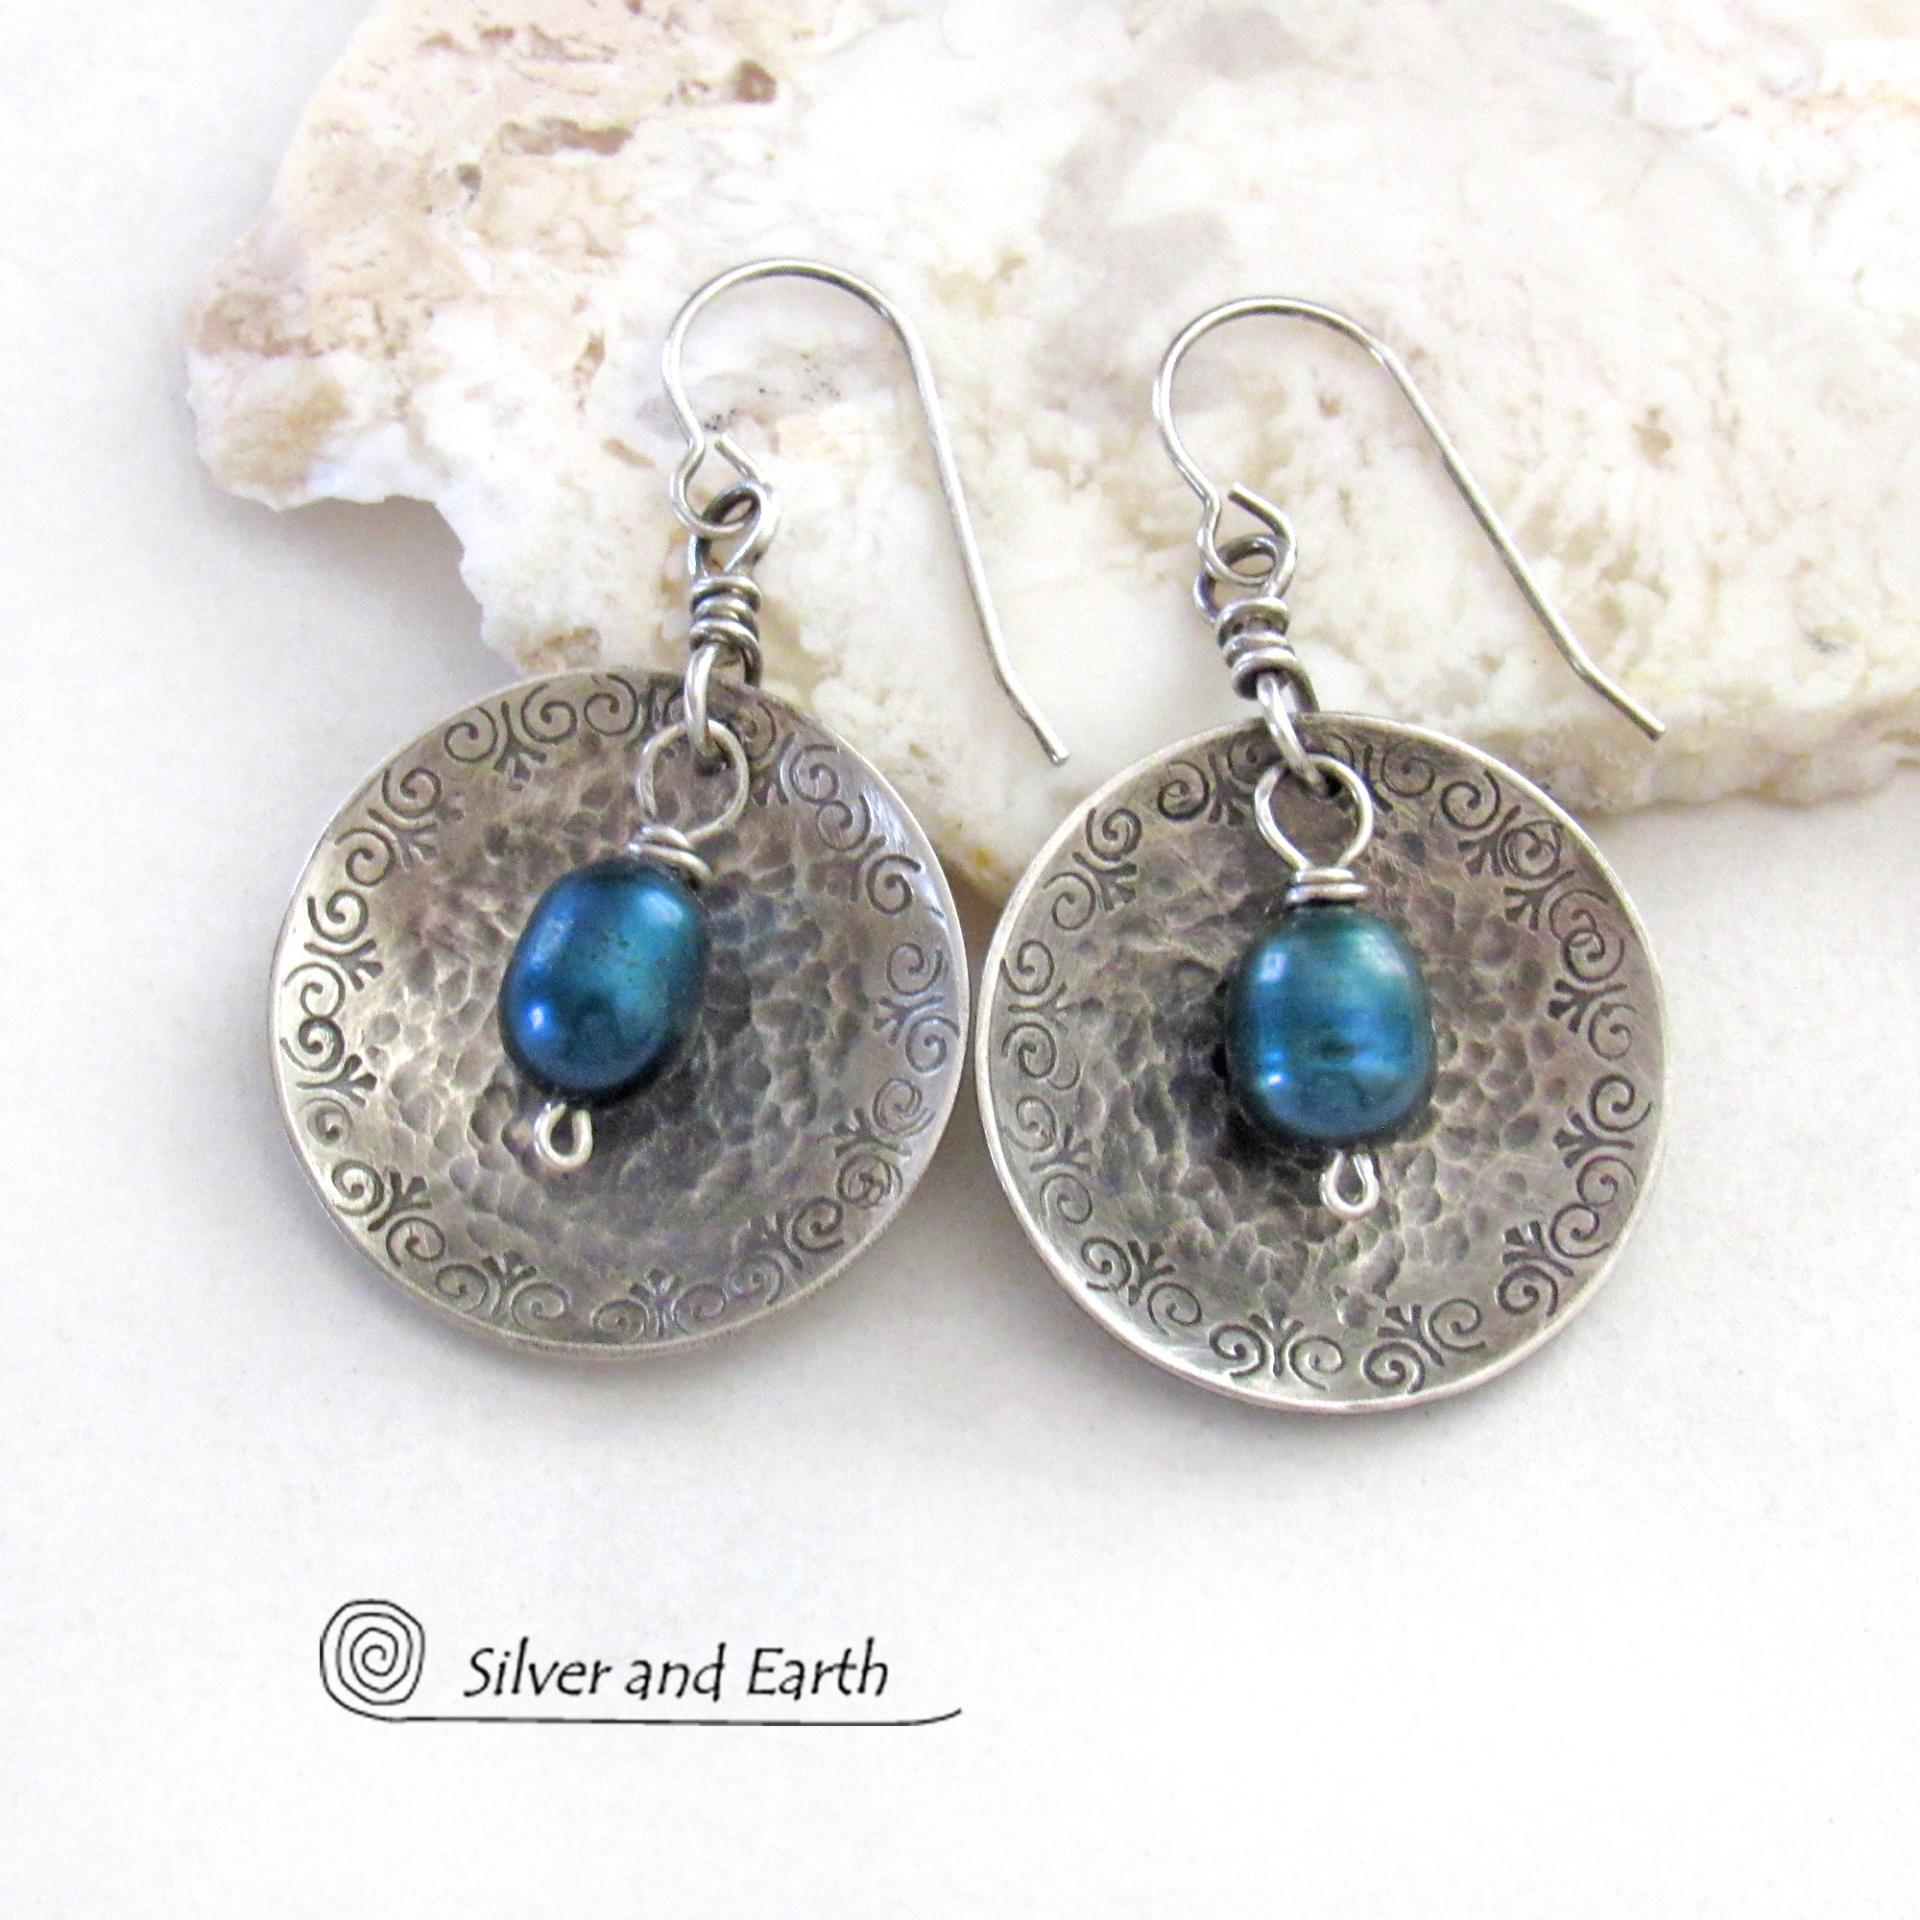 Sterling Silver Earrings with Blue Freshwater Pearls -  Elegant Modern Artisan Handcrafted Sterling Jewelry - June Birthstone Gift